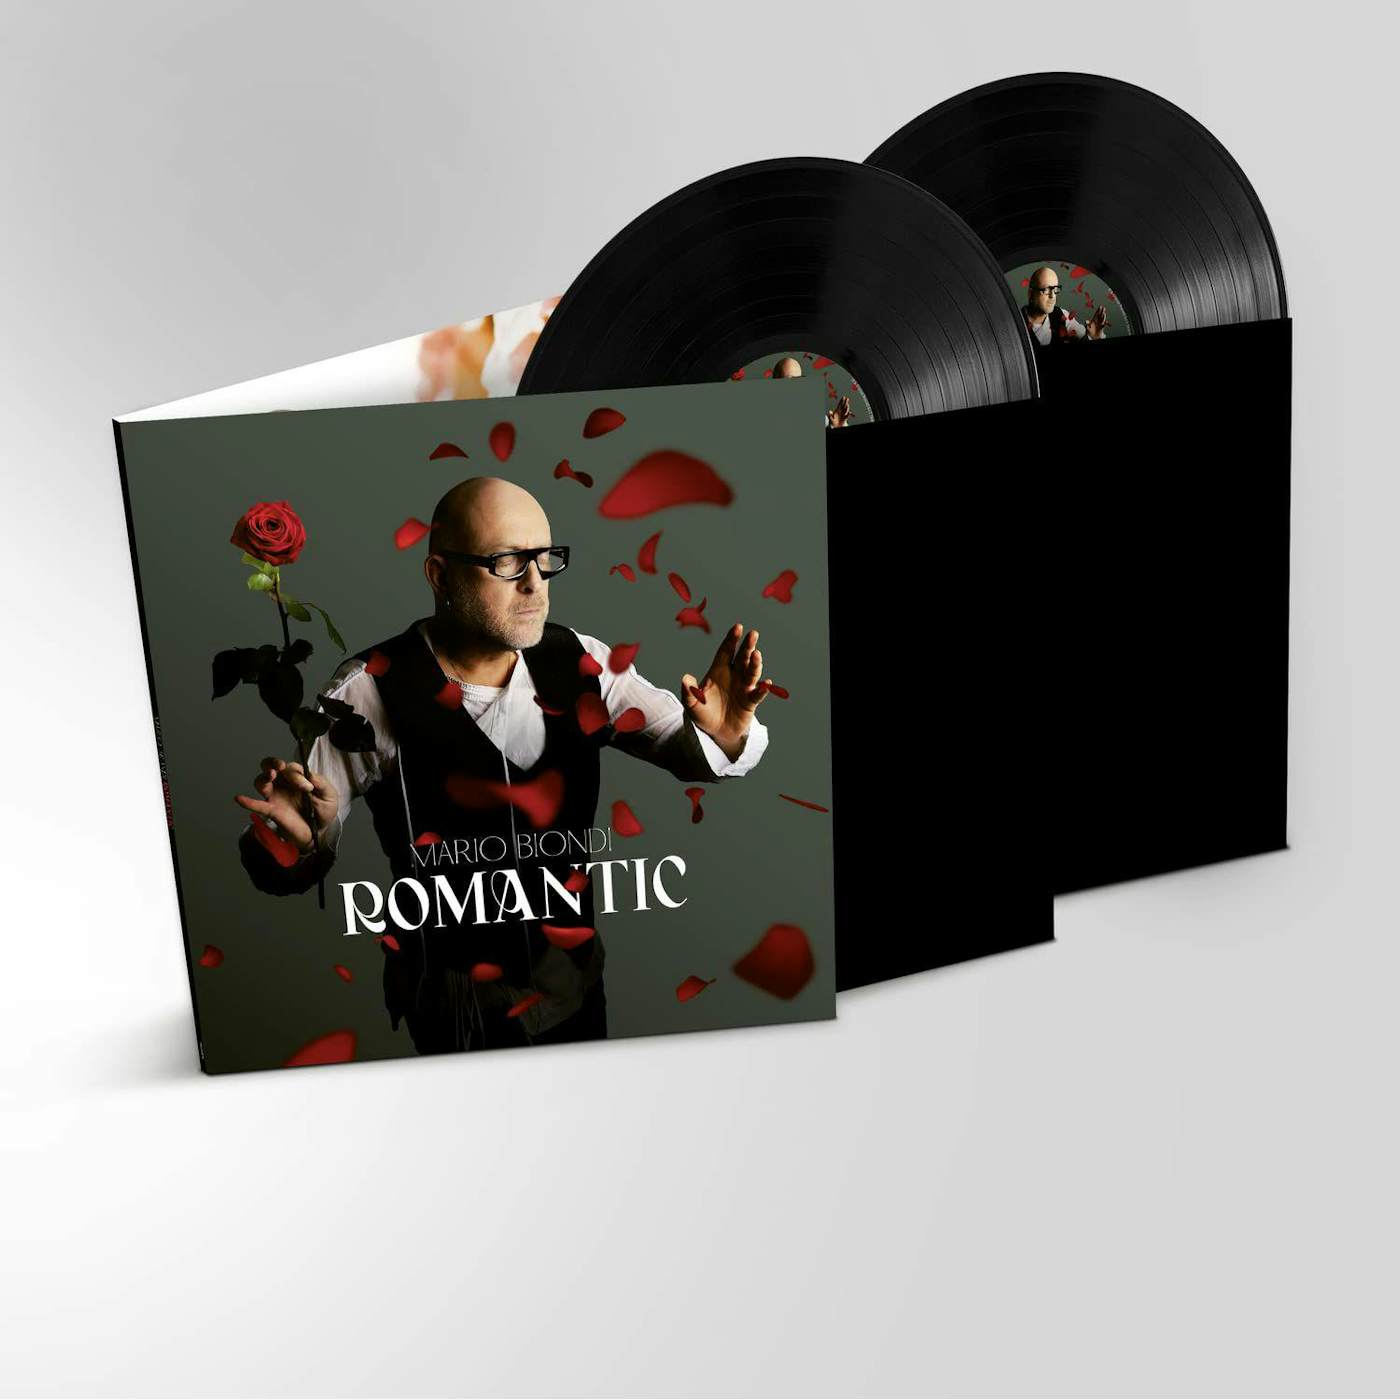 Mario Biondi Romantic Vinyl Record